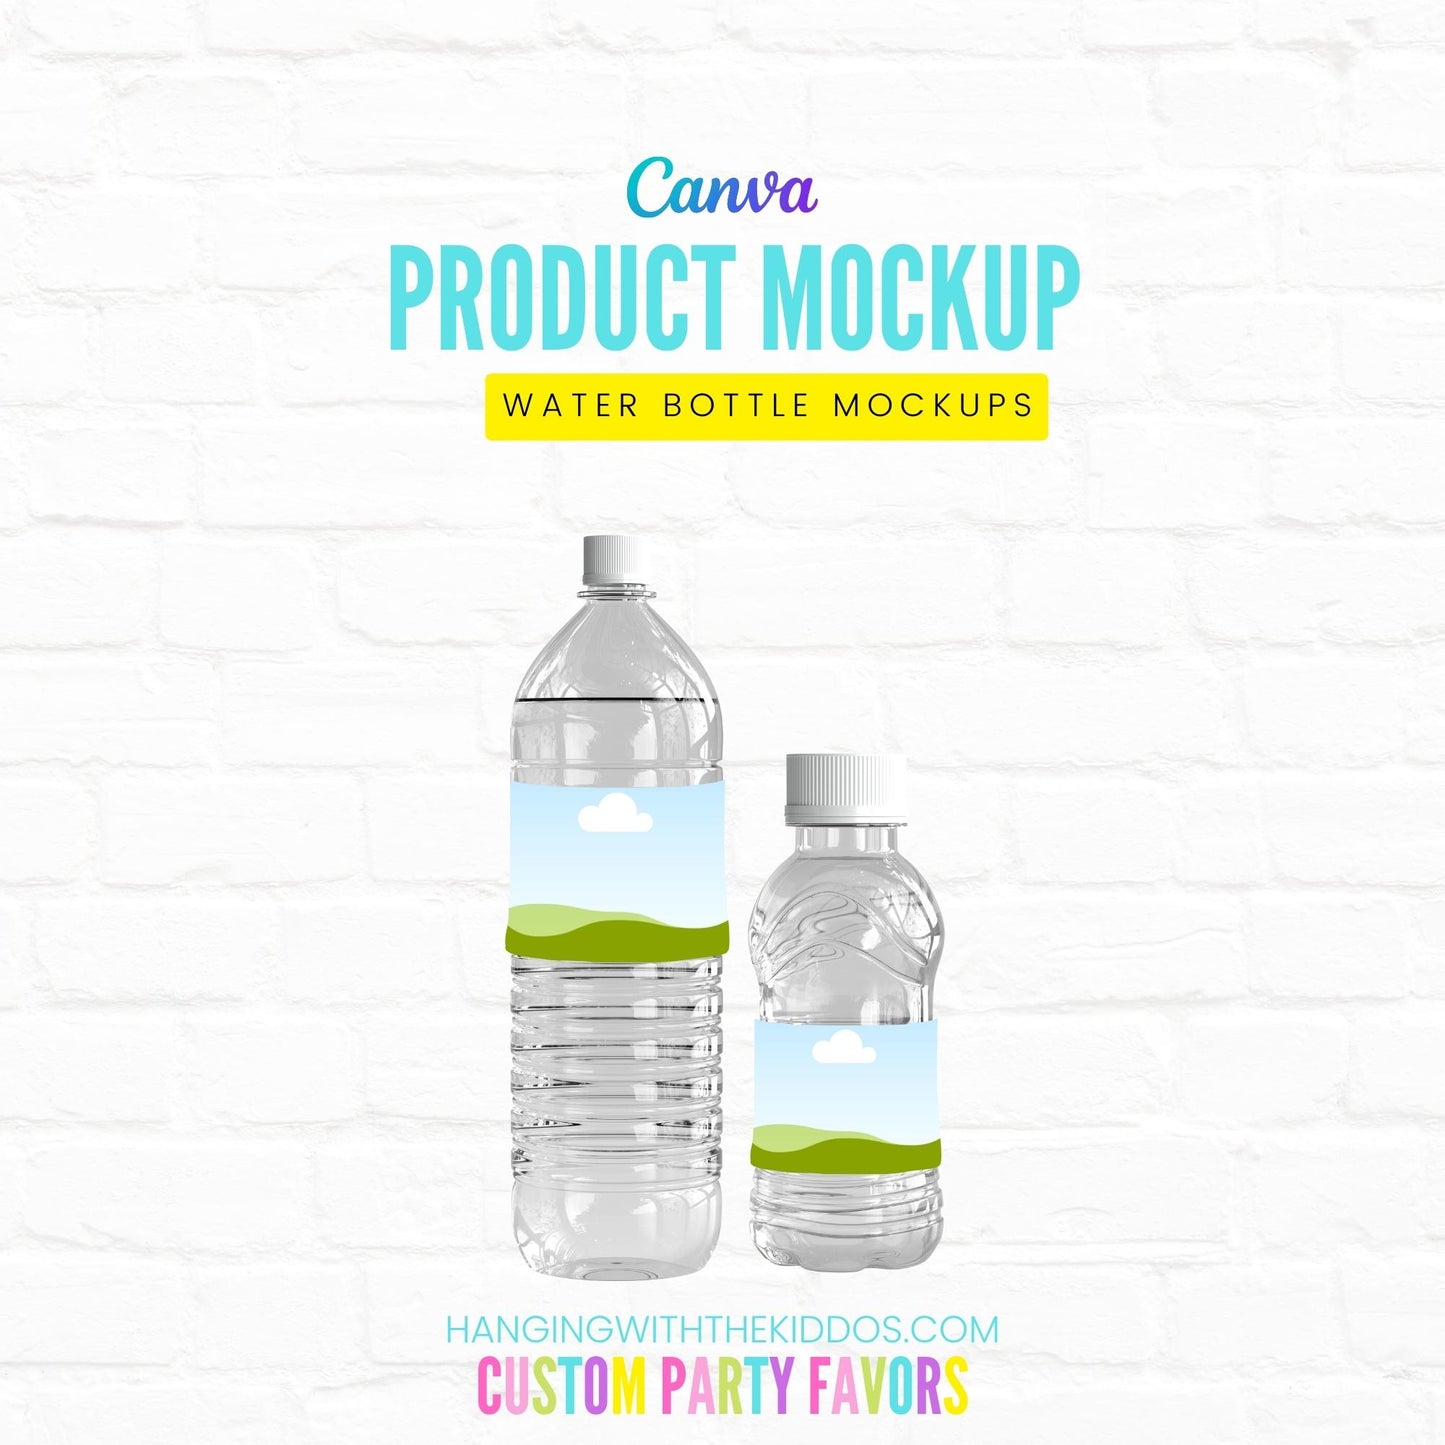 Water Bottle Mockup 16 0Z & 8 OZ|Canva Template